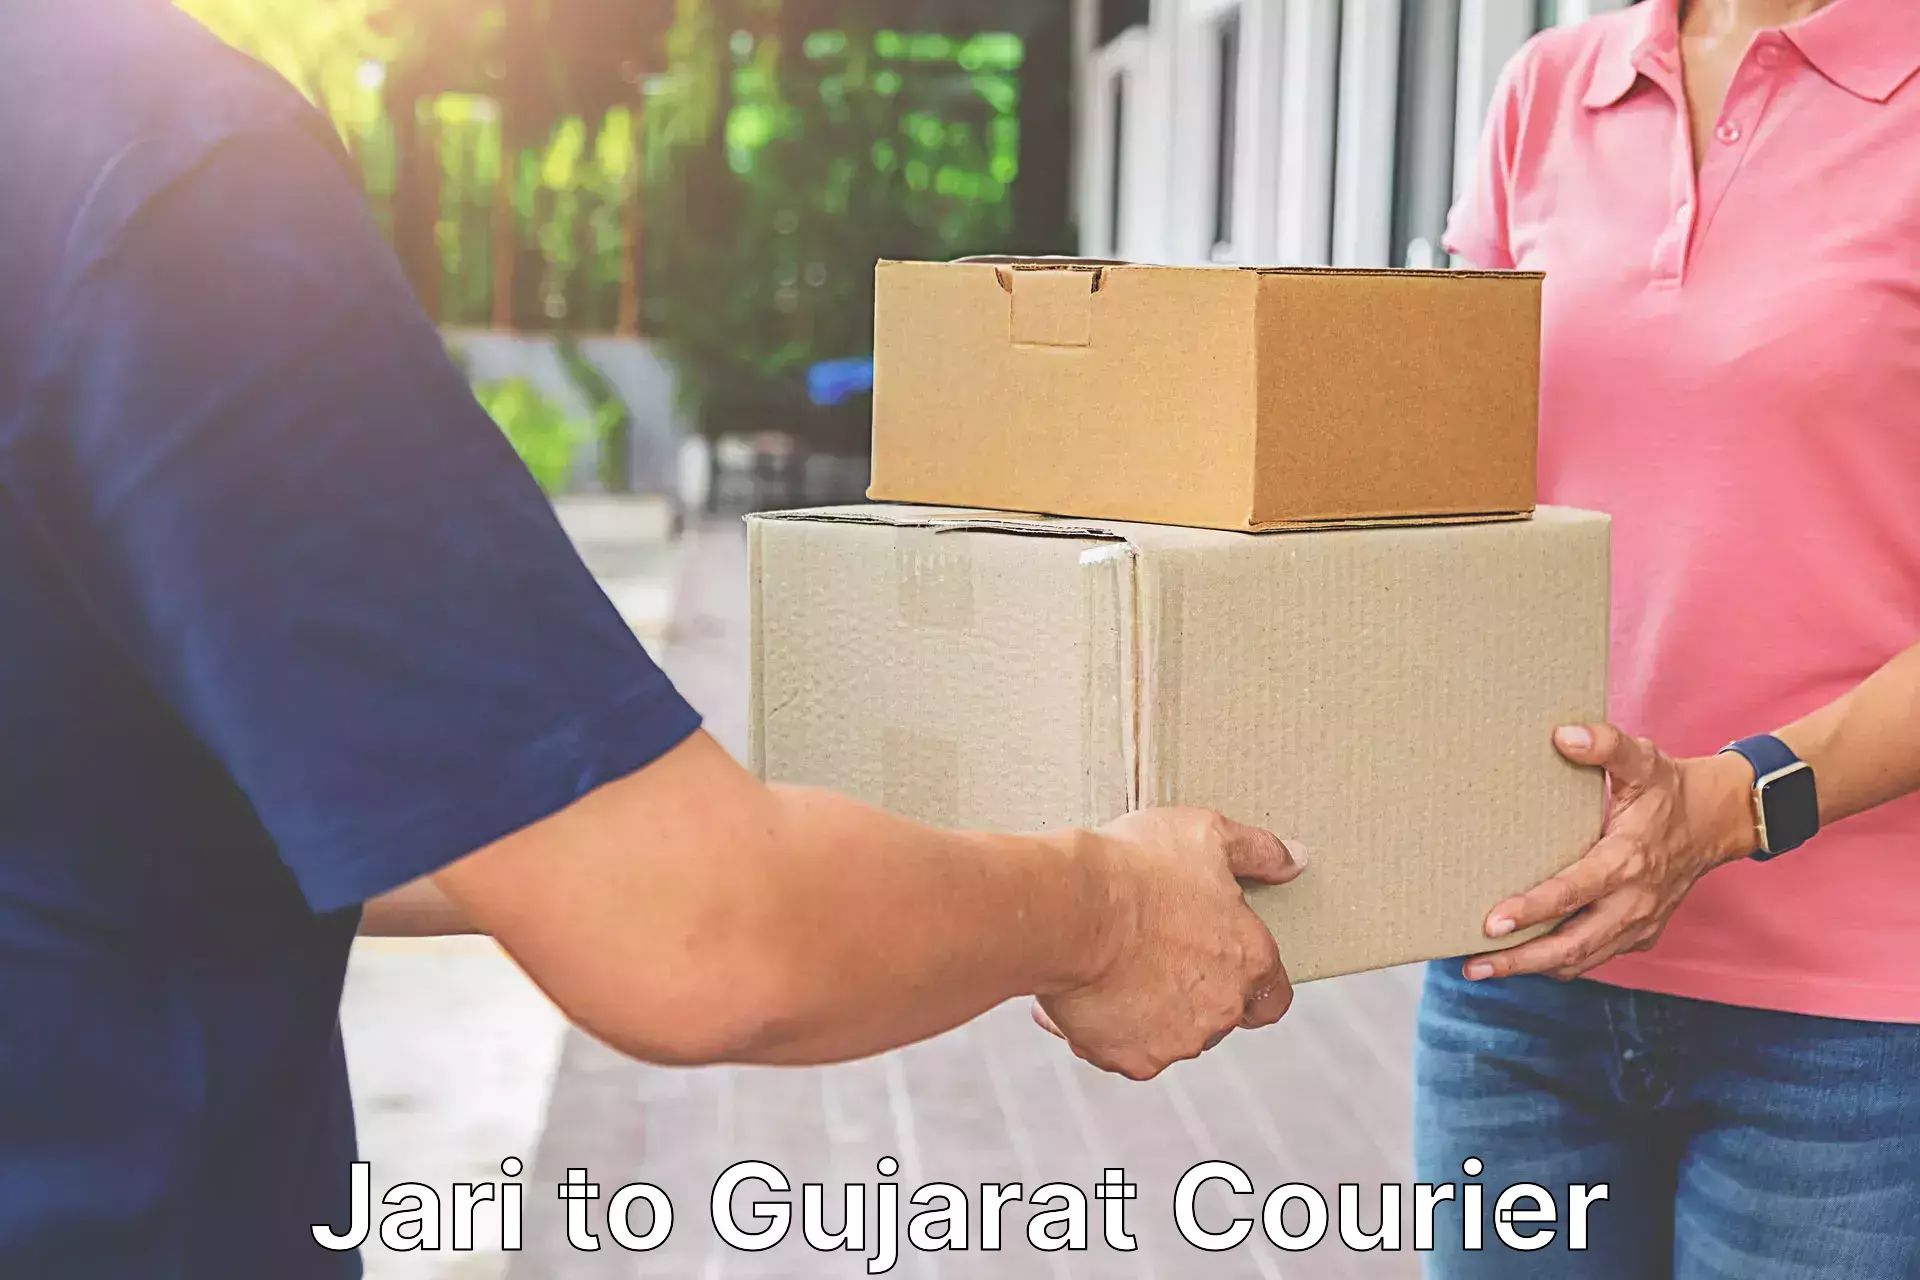 Efficient courier operations Jari to Gujarat